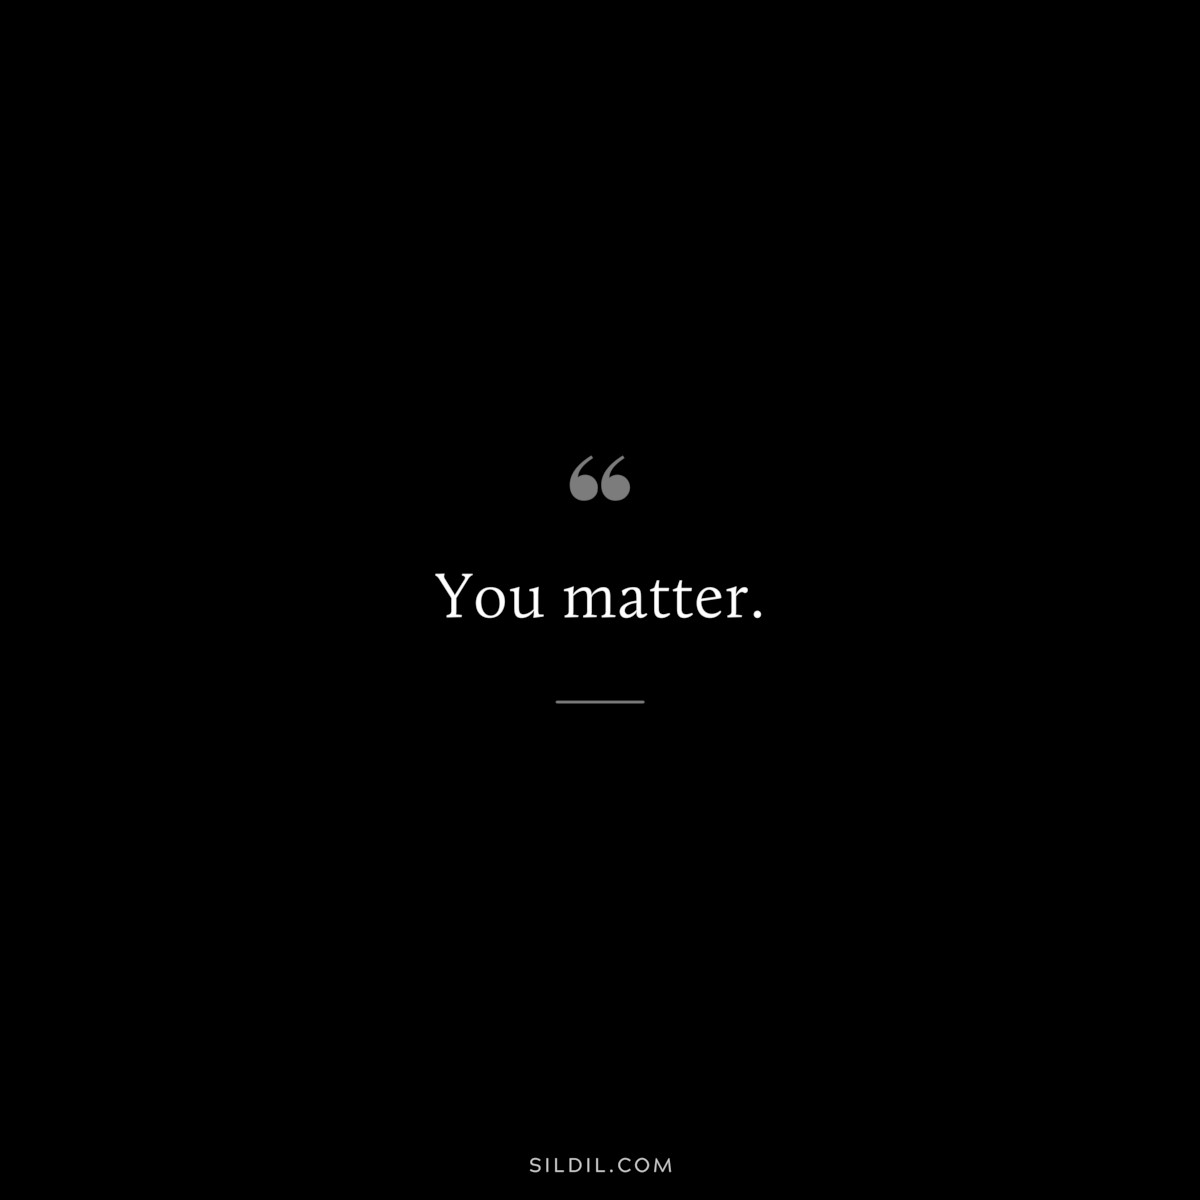 You matter.